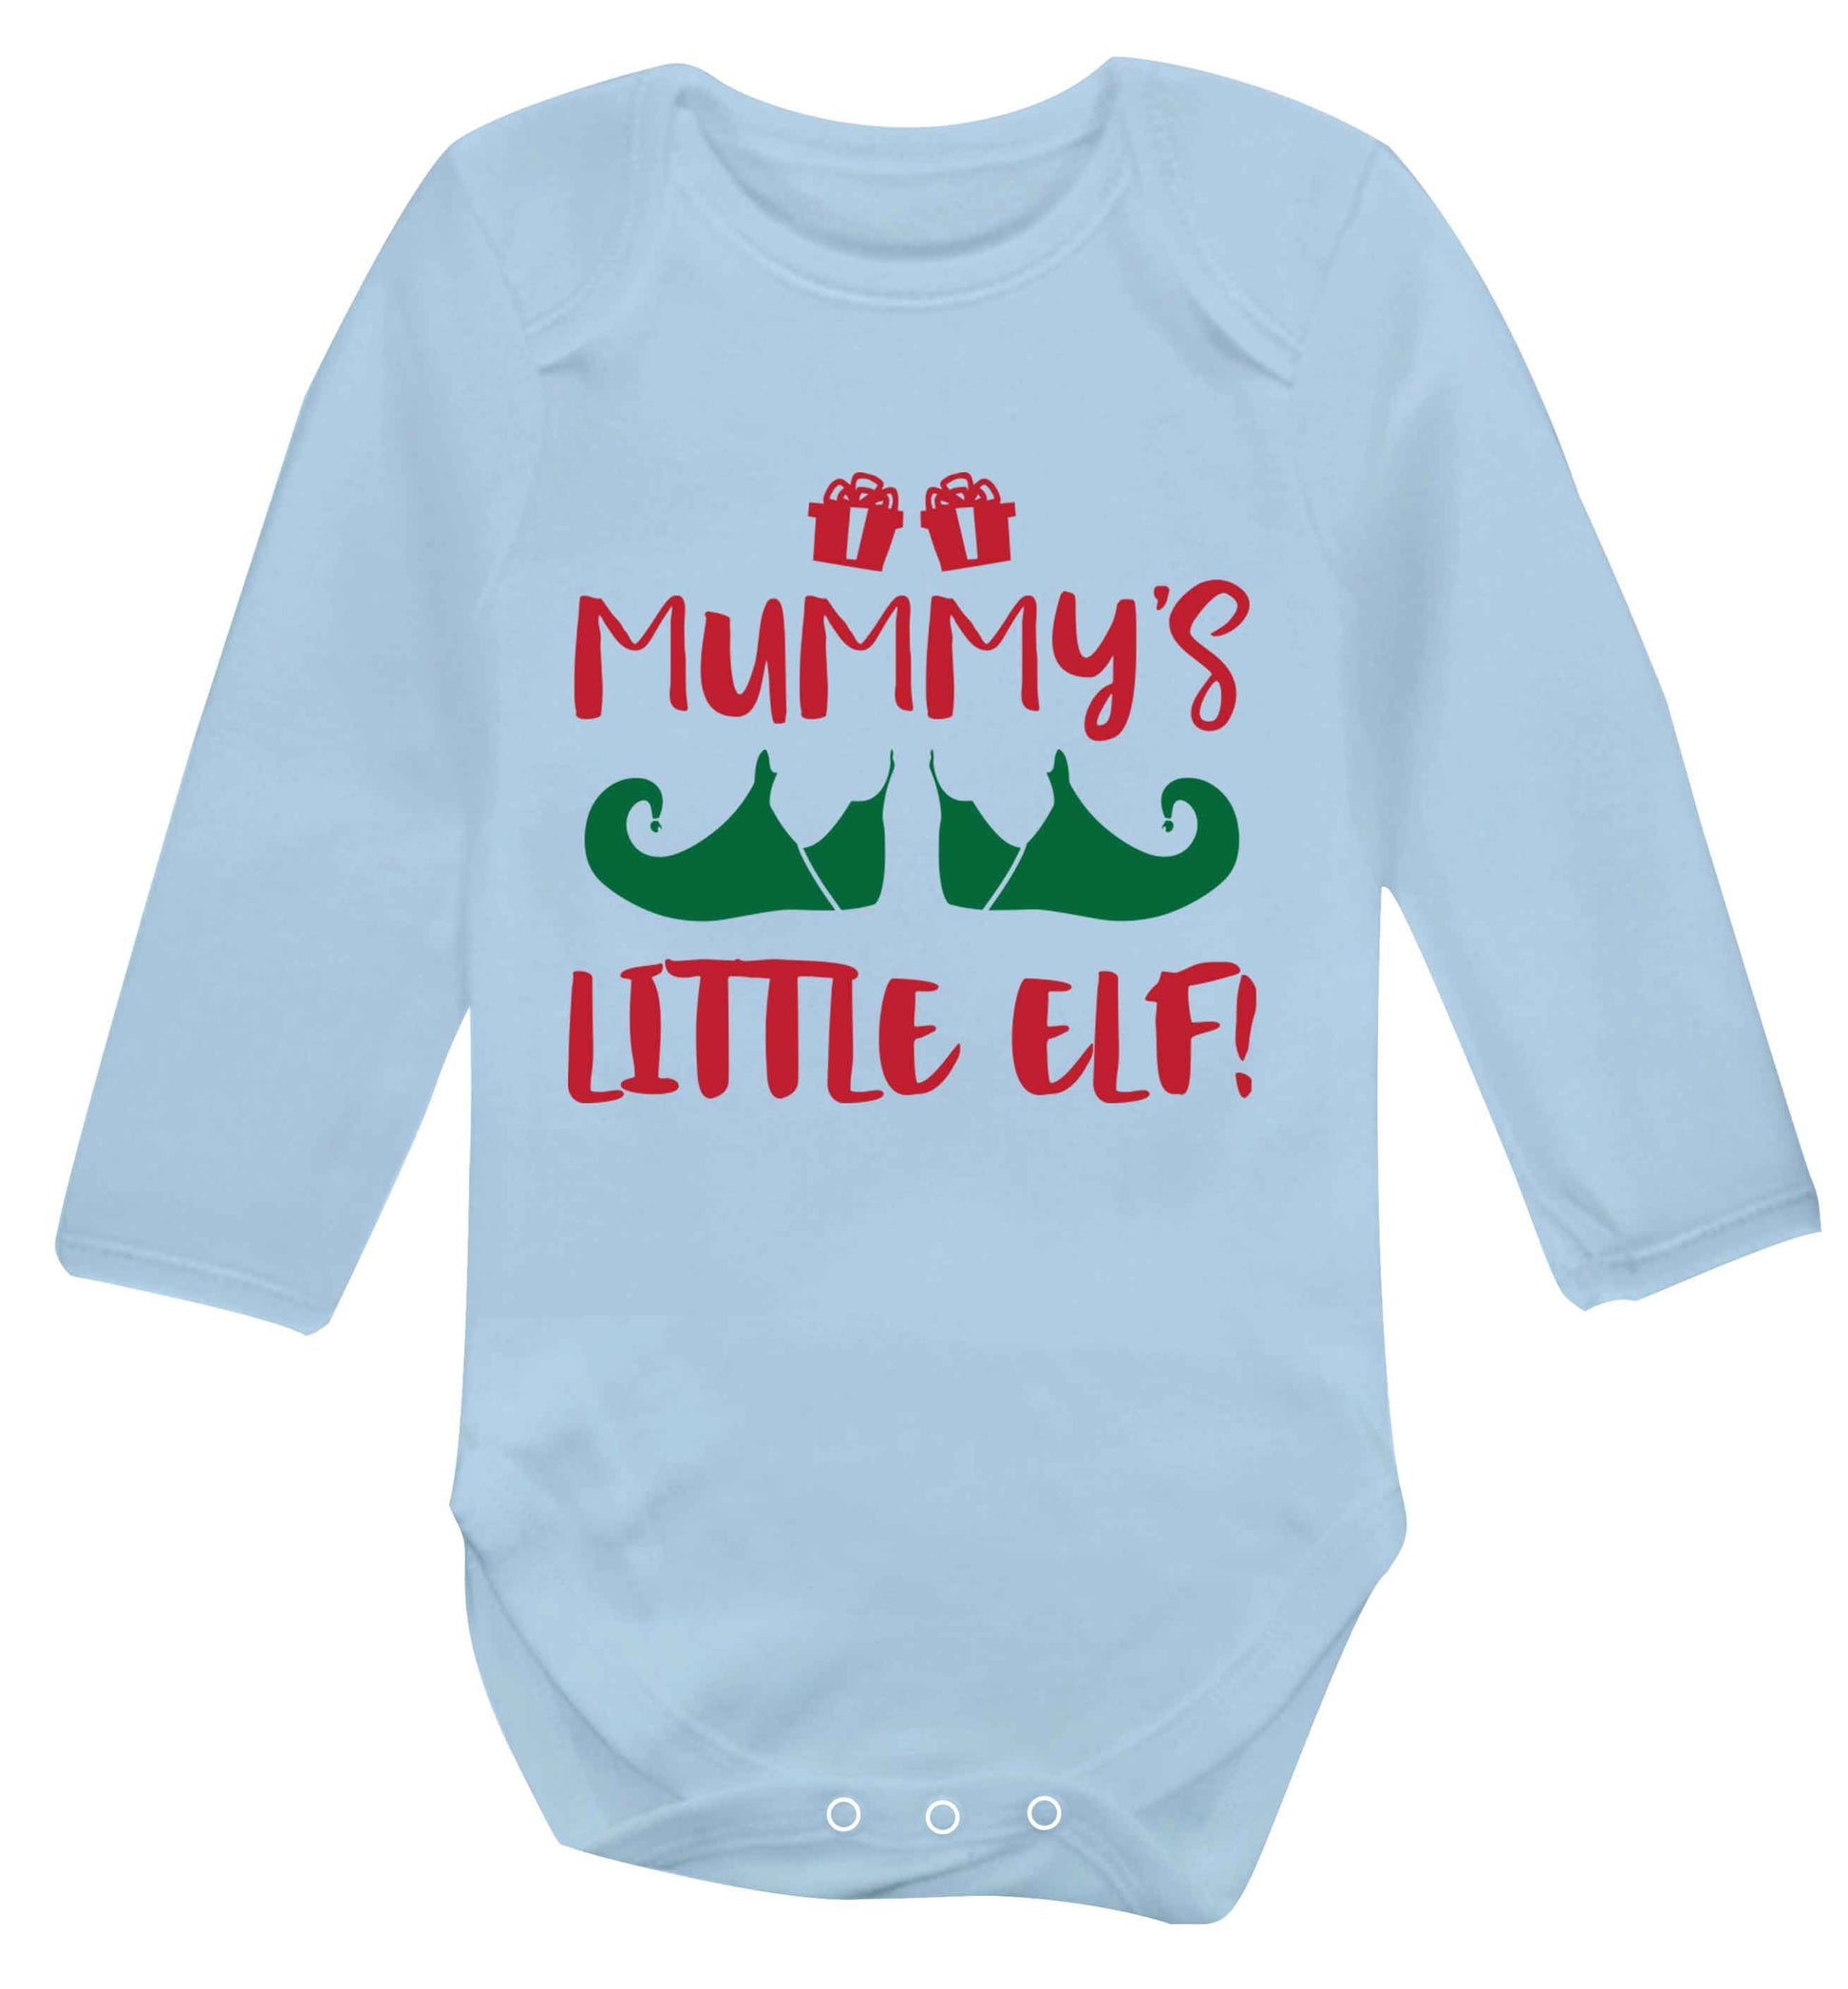 Mummy's little elf Baby Vest long sleeved pale blue 6-12 months